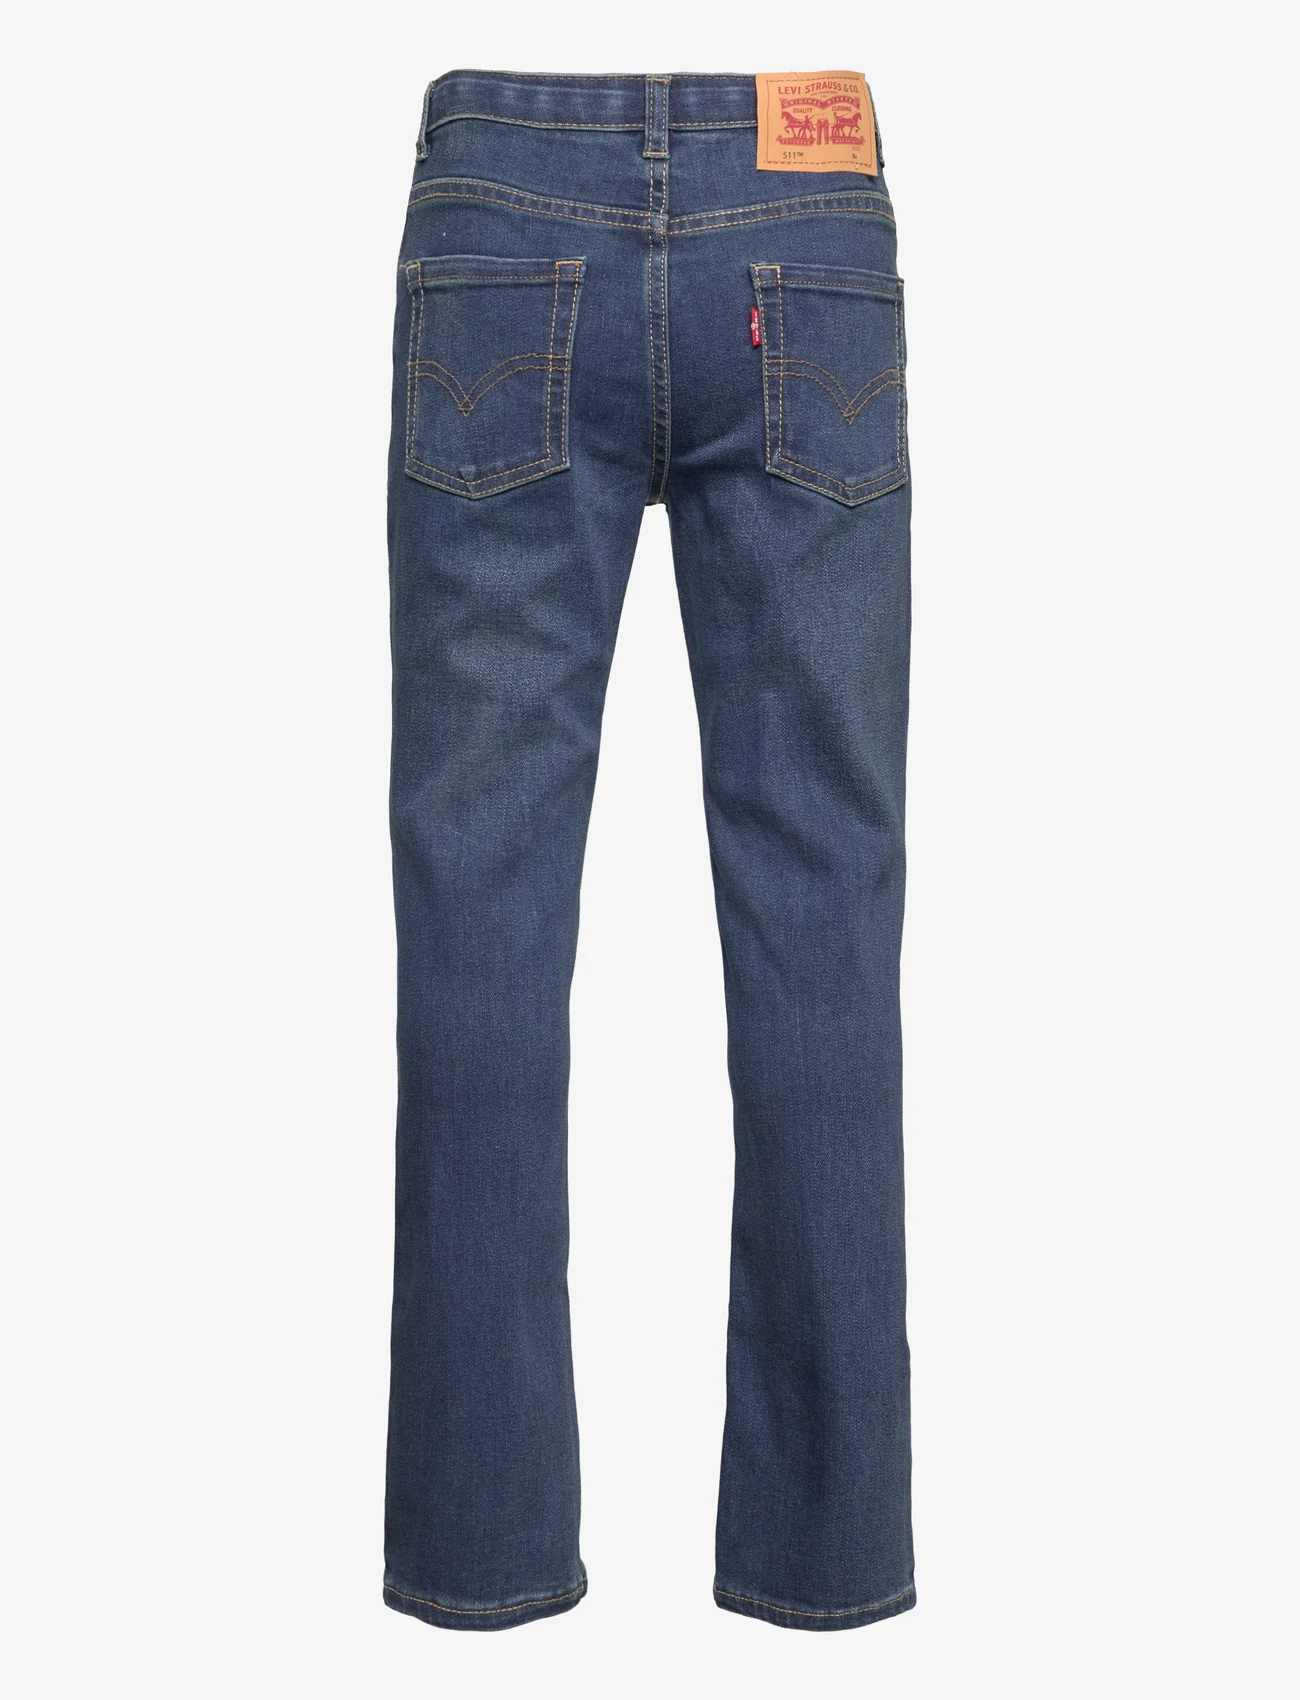 Levi's - Levi's® 511™ Slim Fit Eco Performance Jeans - suorat farkut - blue - 1